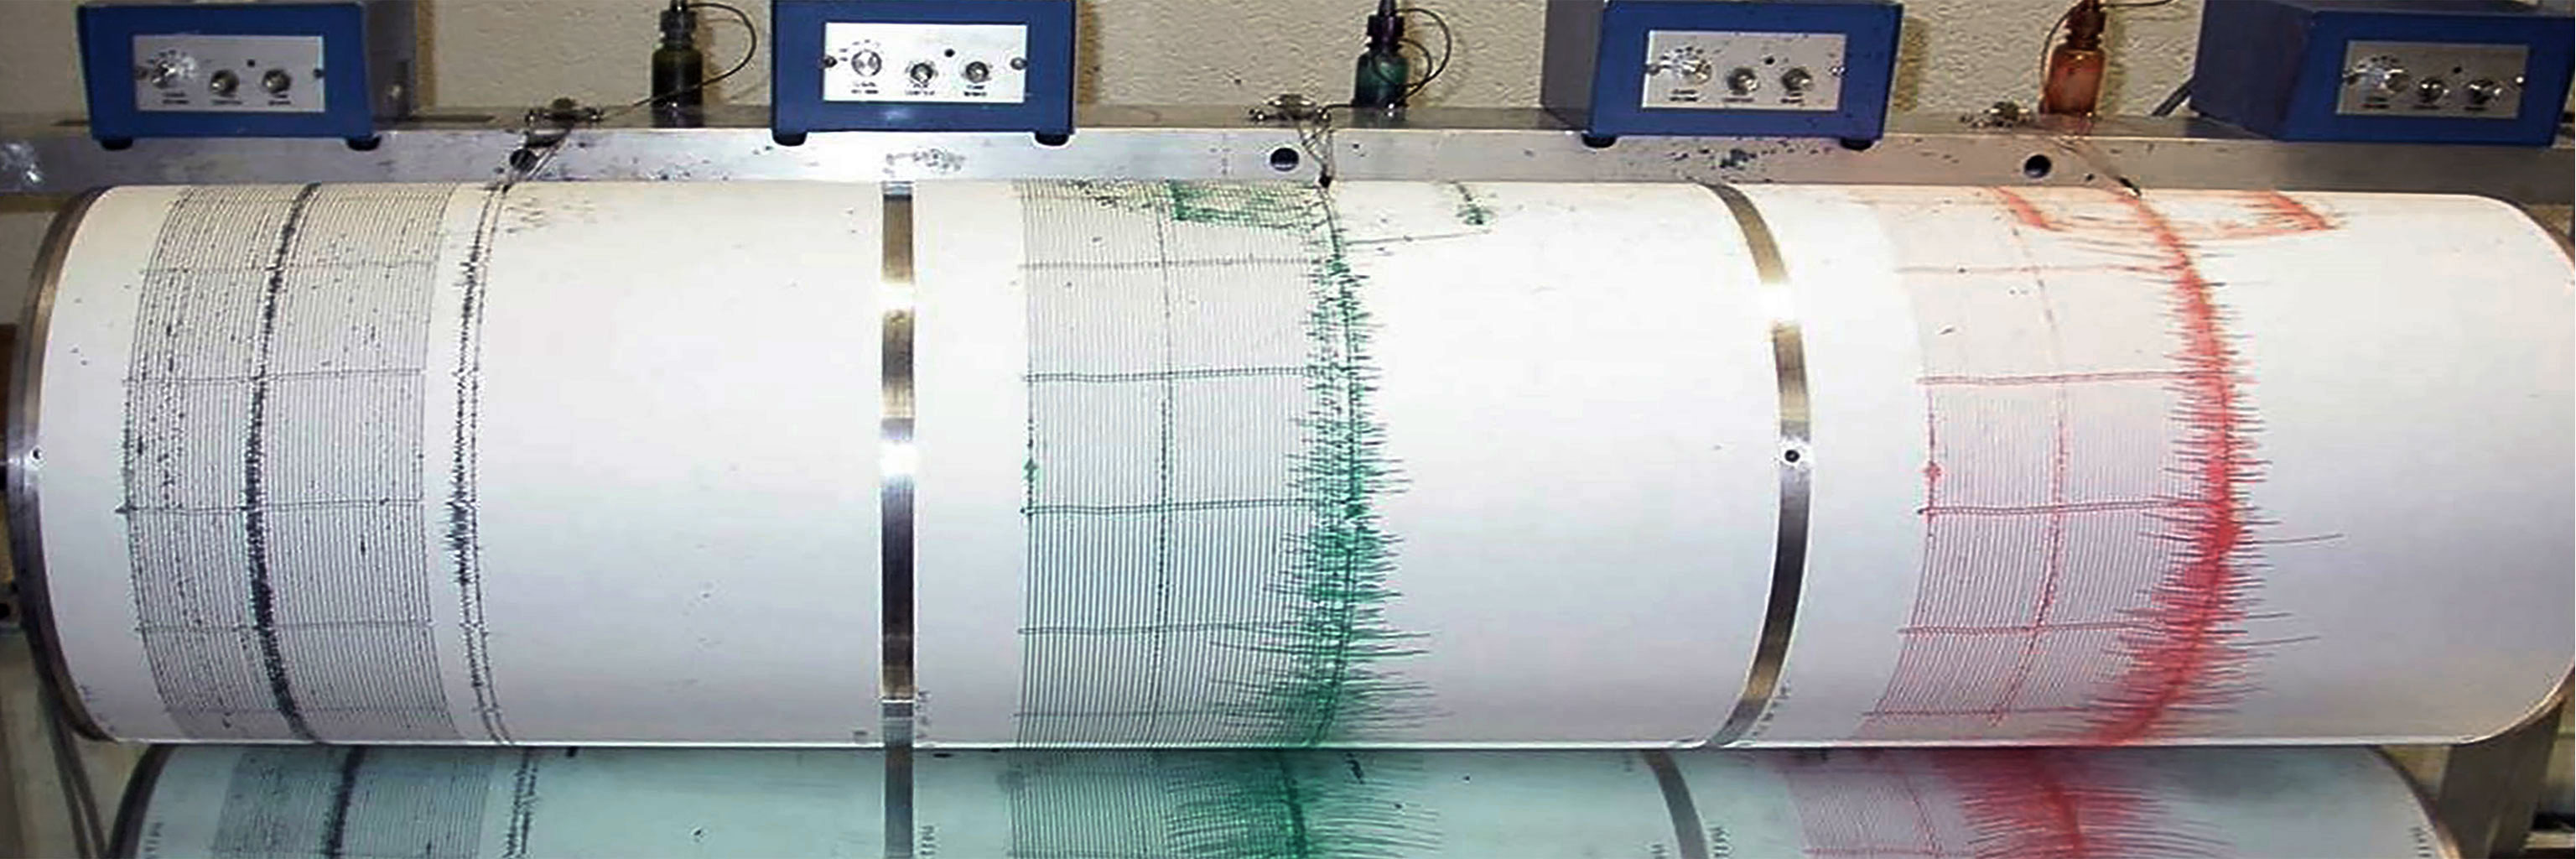 seismograph machine